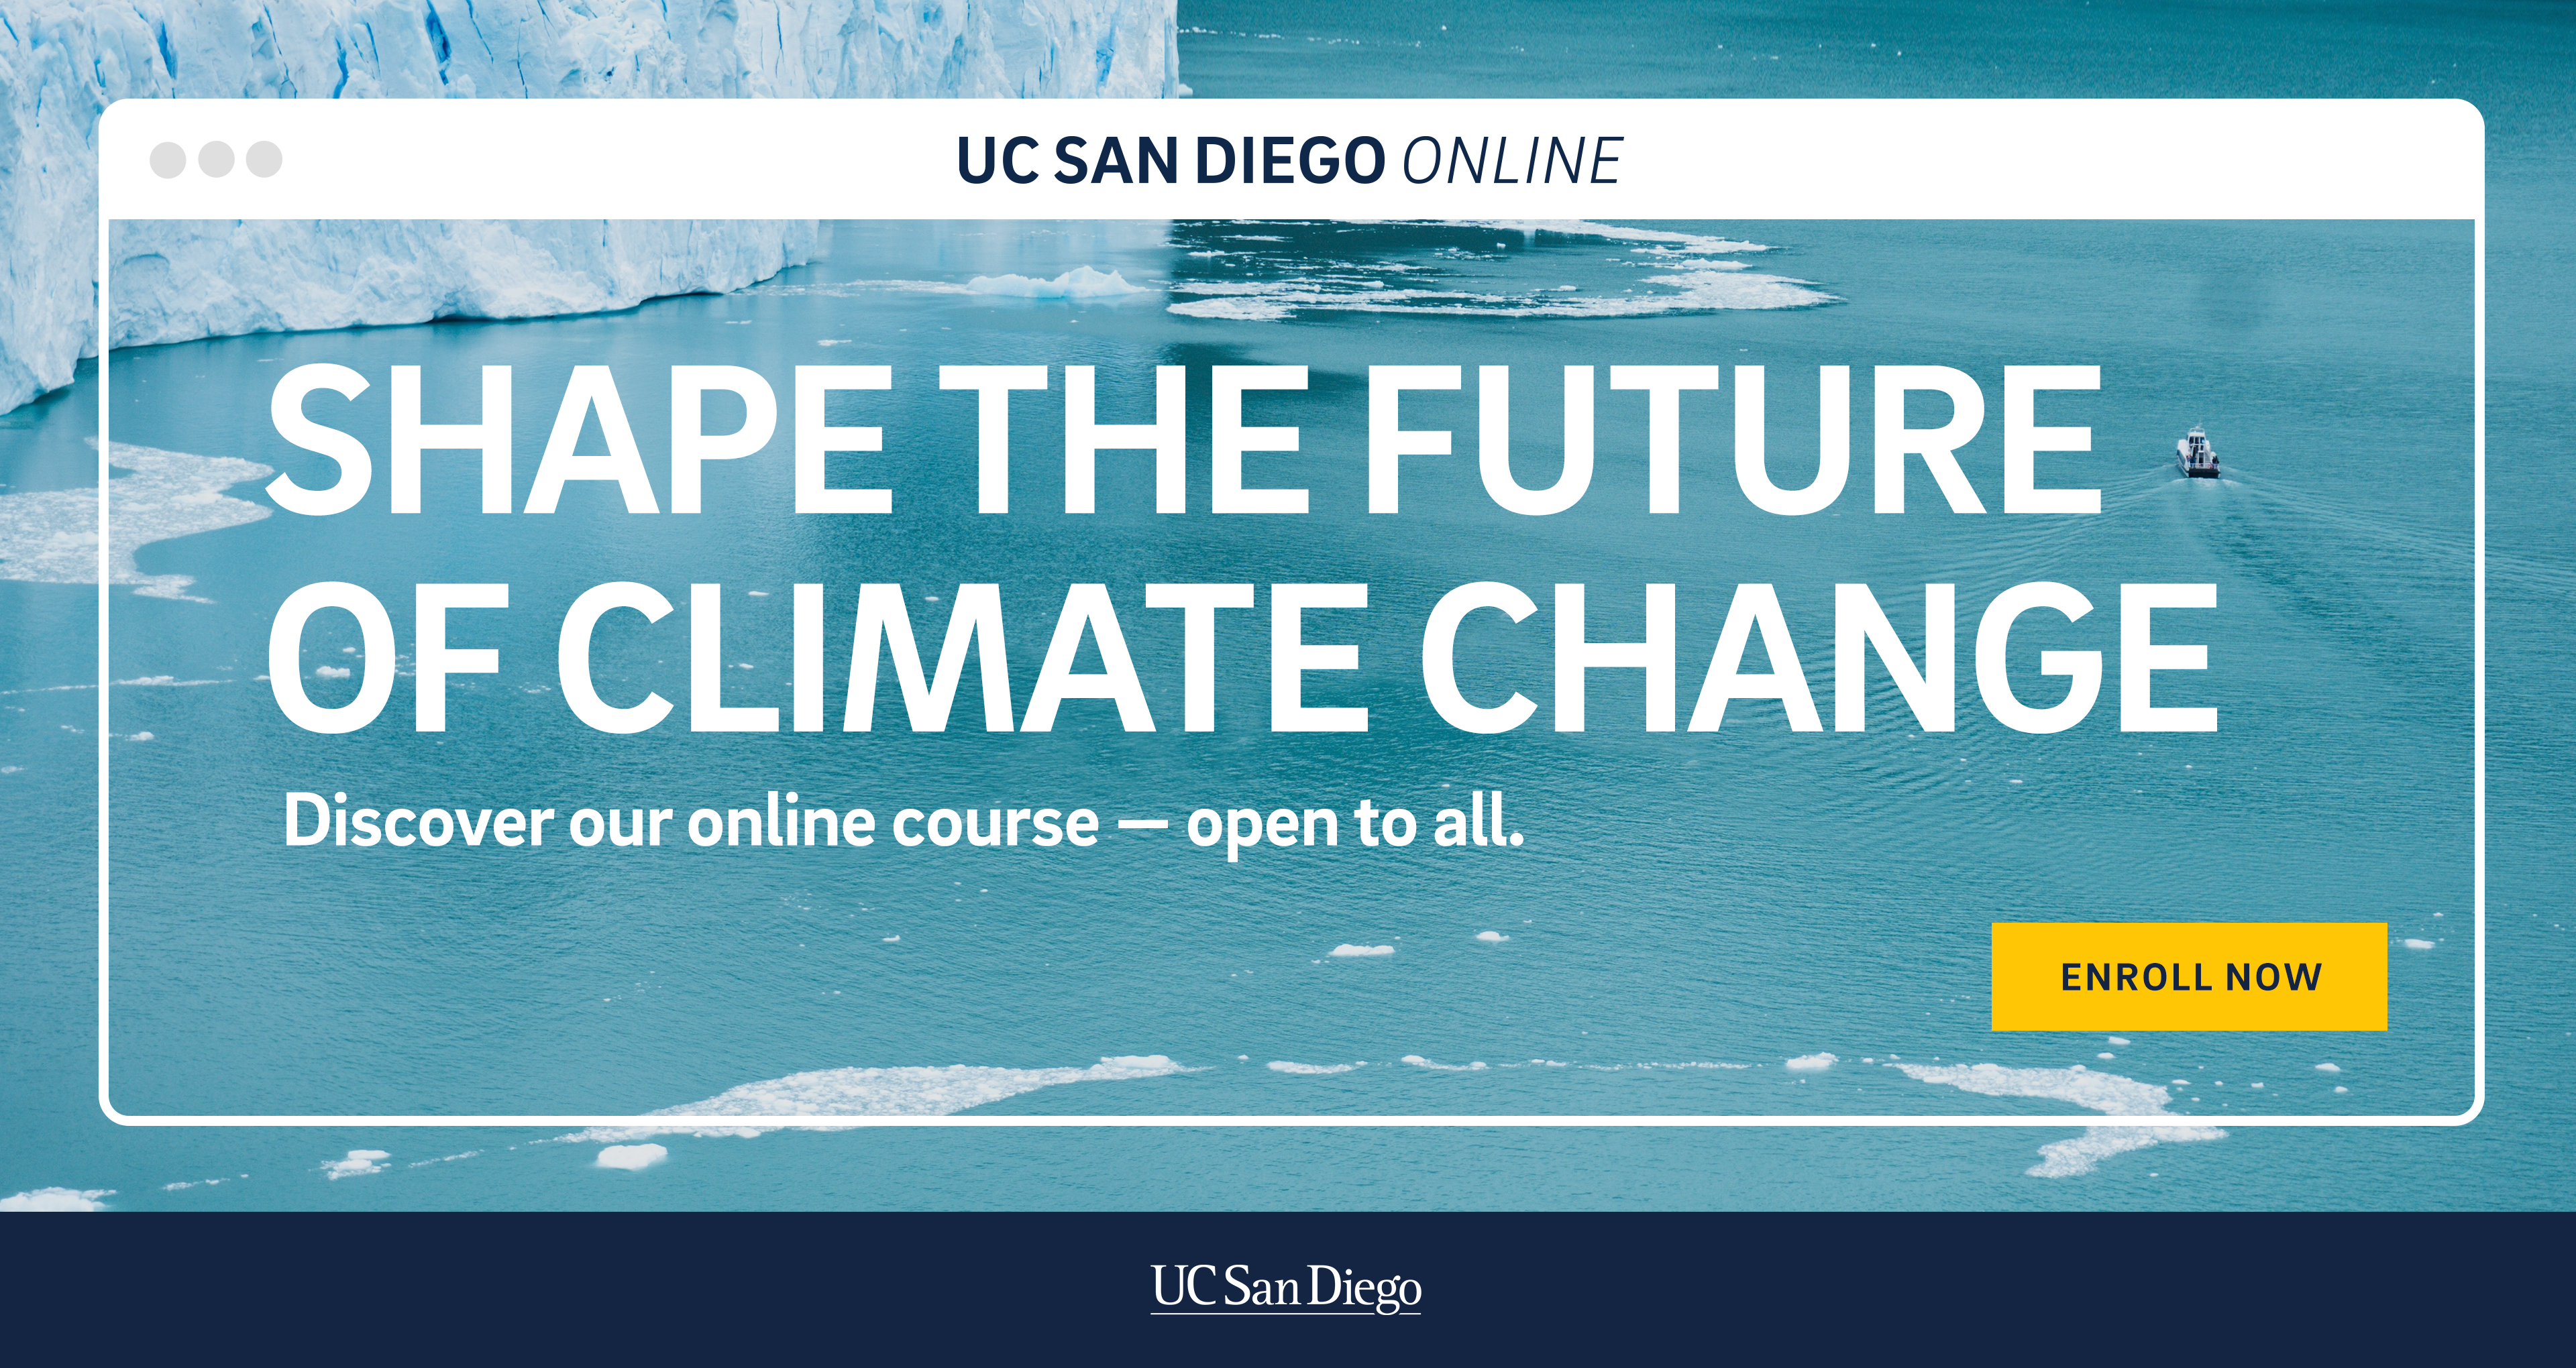 UCSD_Online_Web-Banner_Future_HD_1920x1080